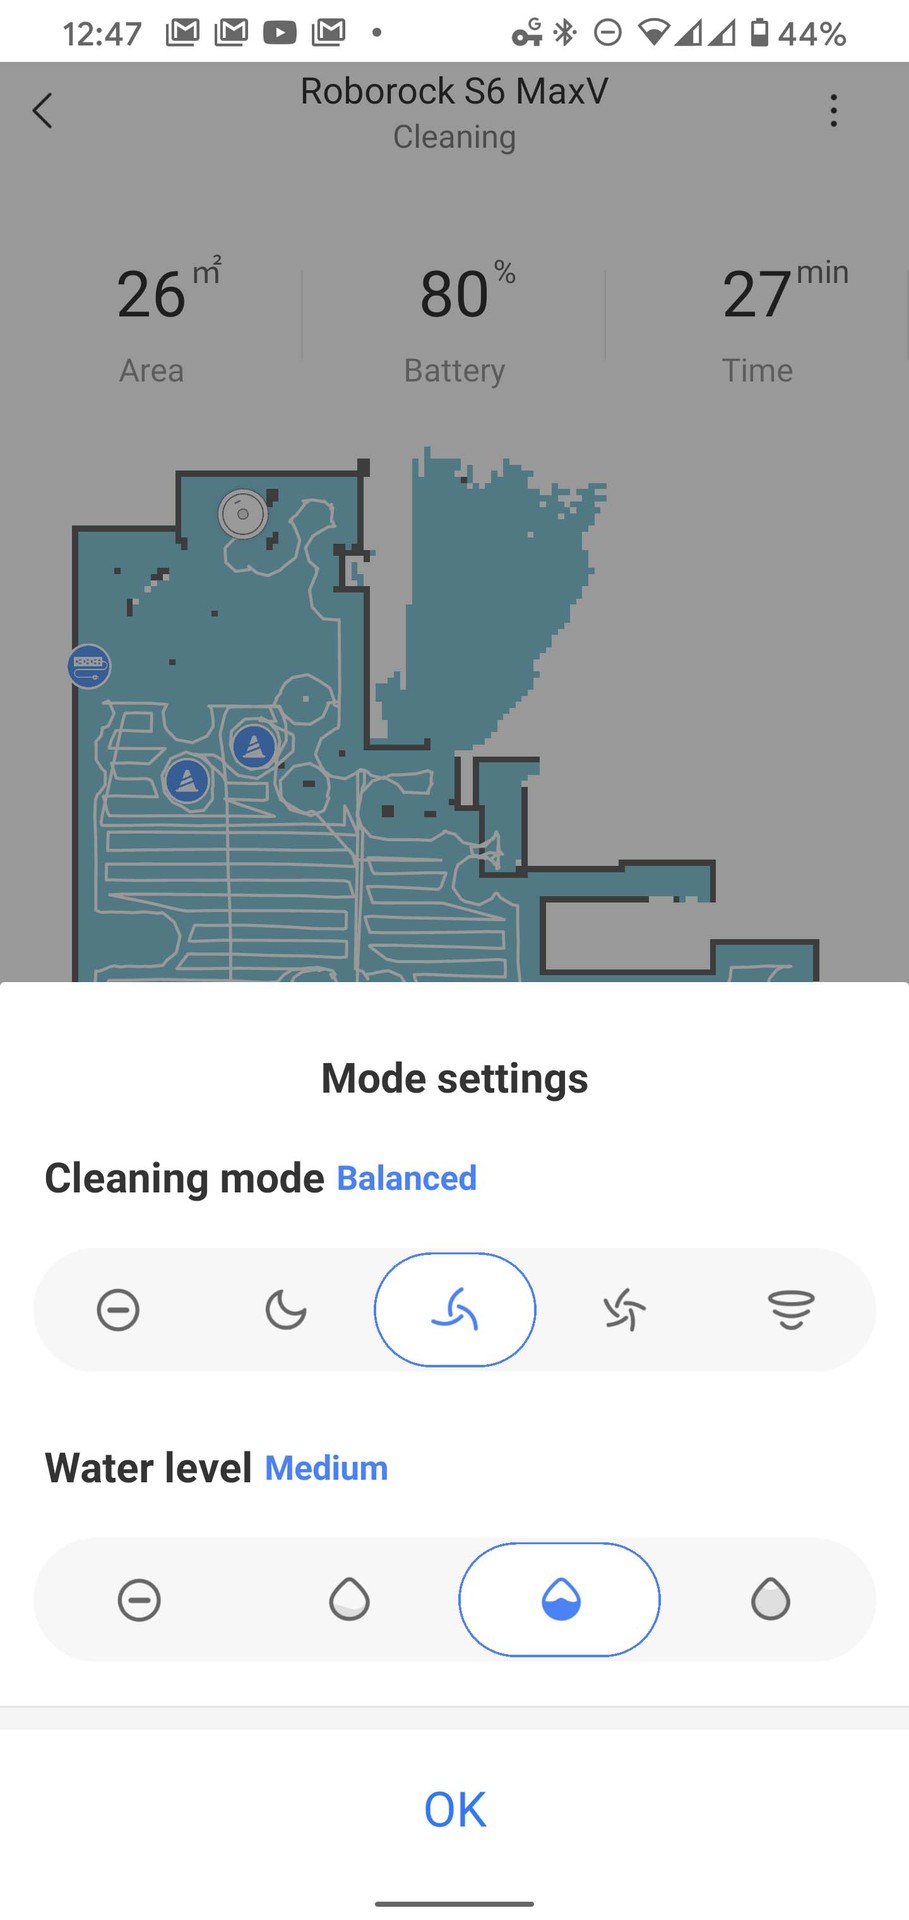 Roborock app cleanup mode settings